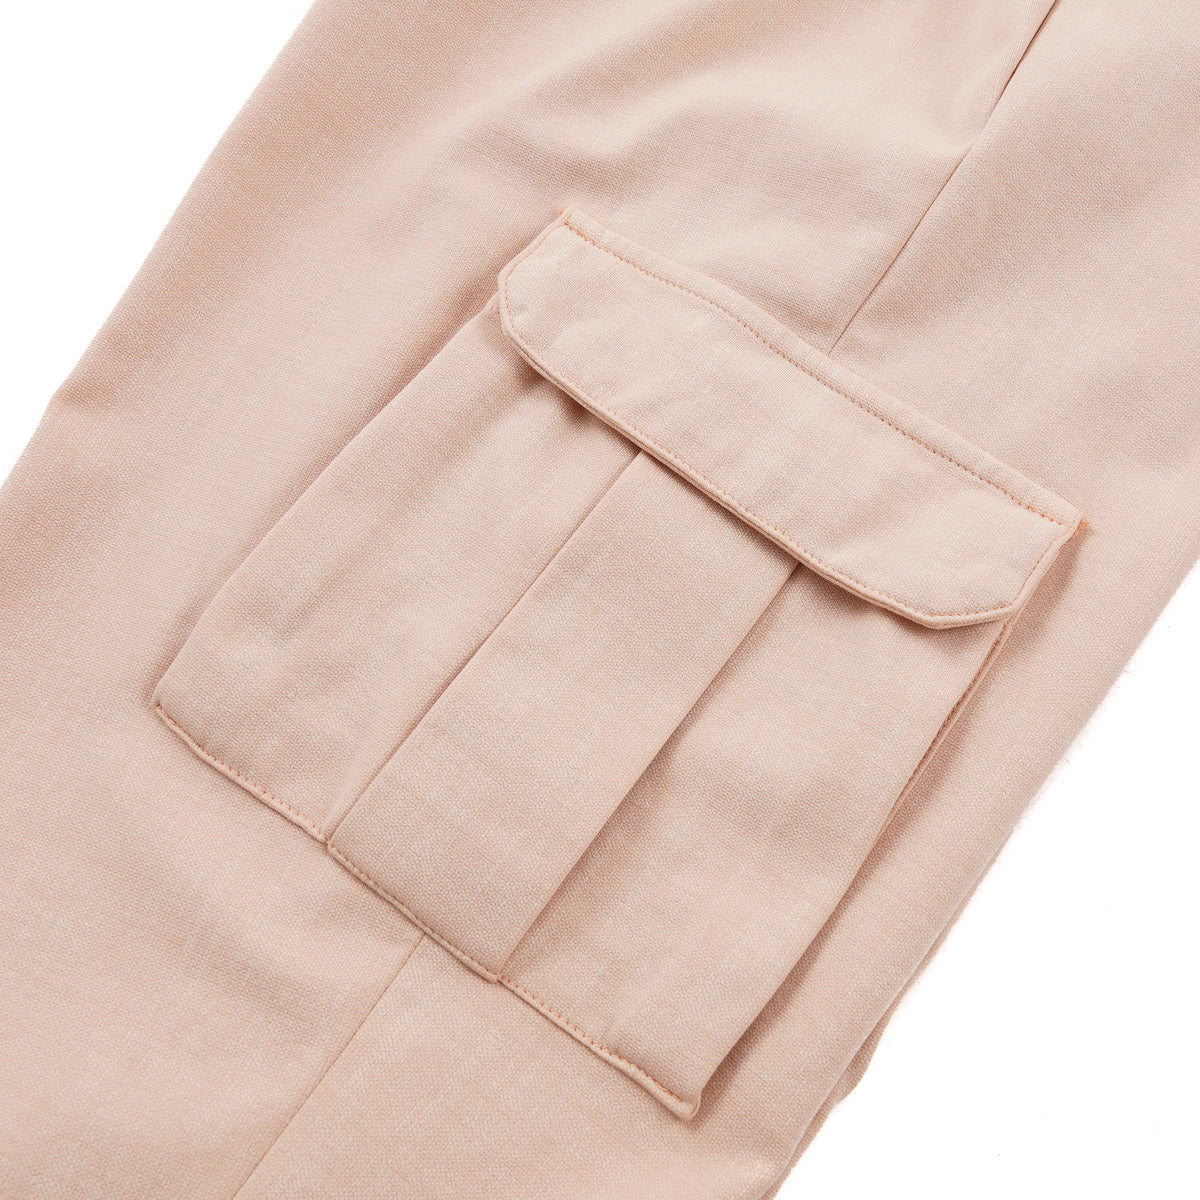 Sartorio Drawstring Pants with Side Pockets - Top Shelf Apparel